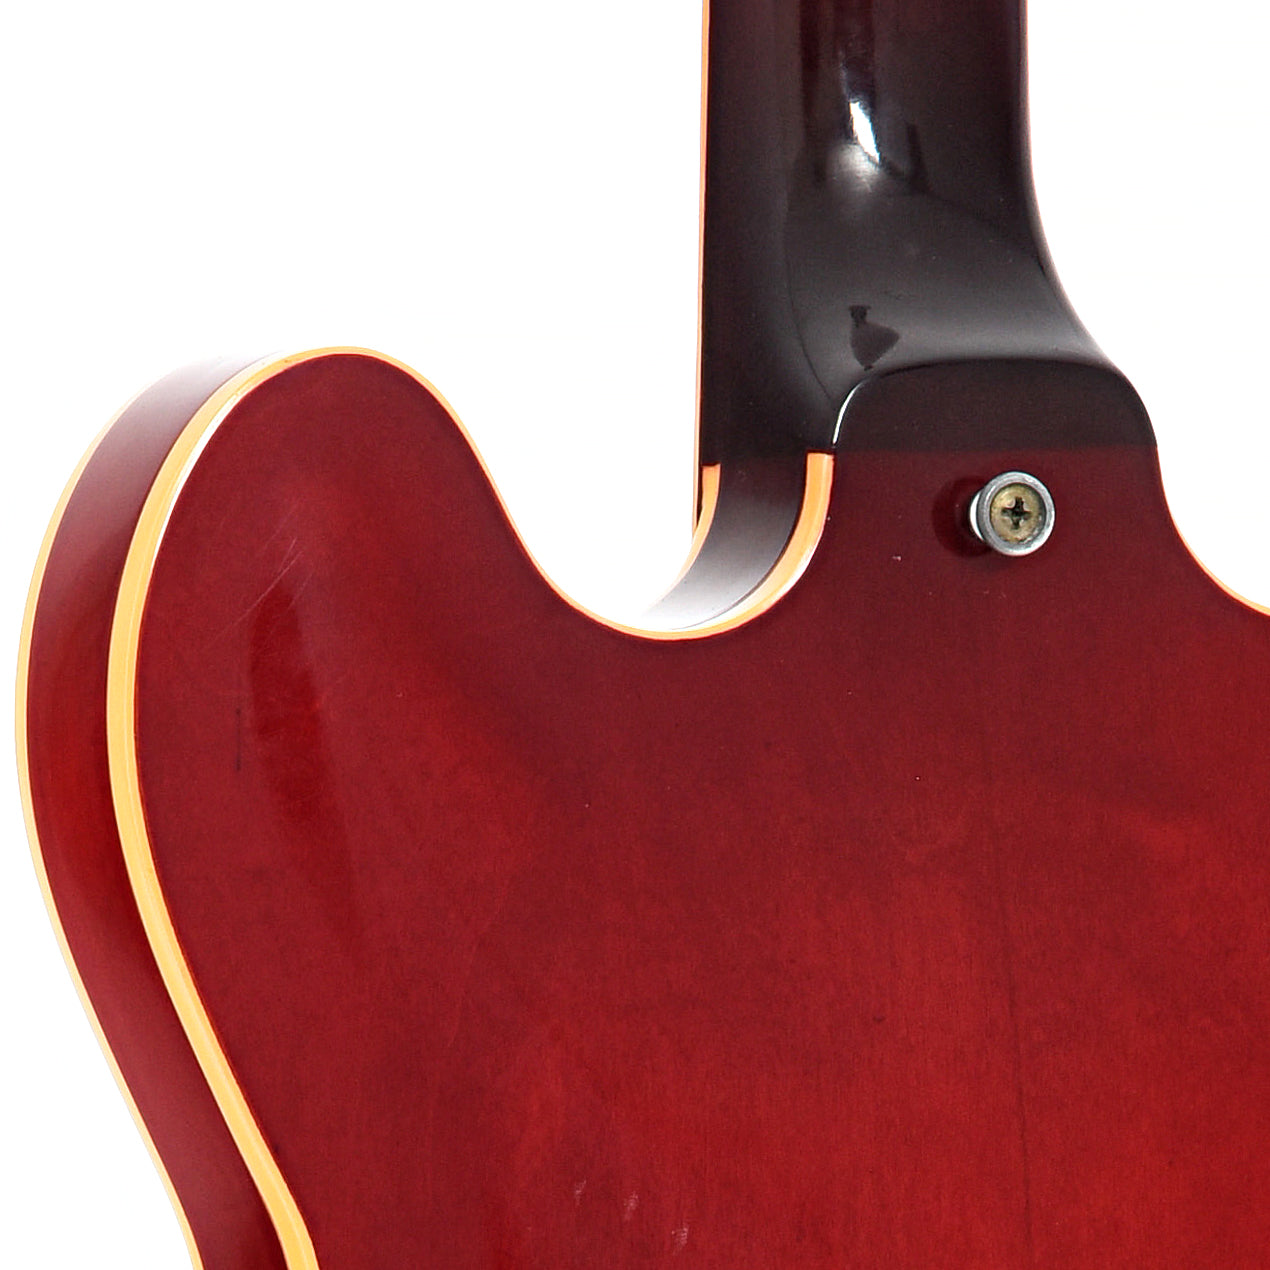 Heel of Gibson ES-335 Hollow Body Electric Guitar